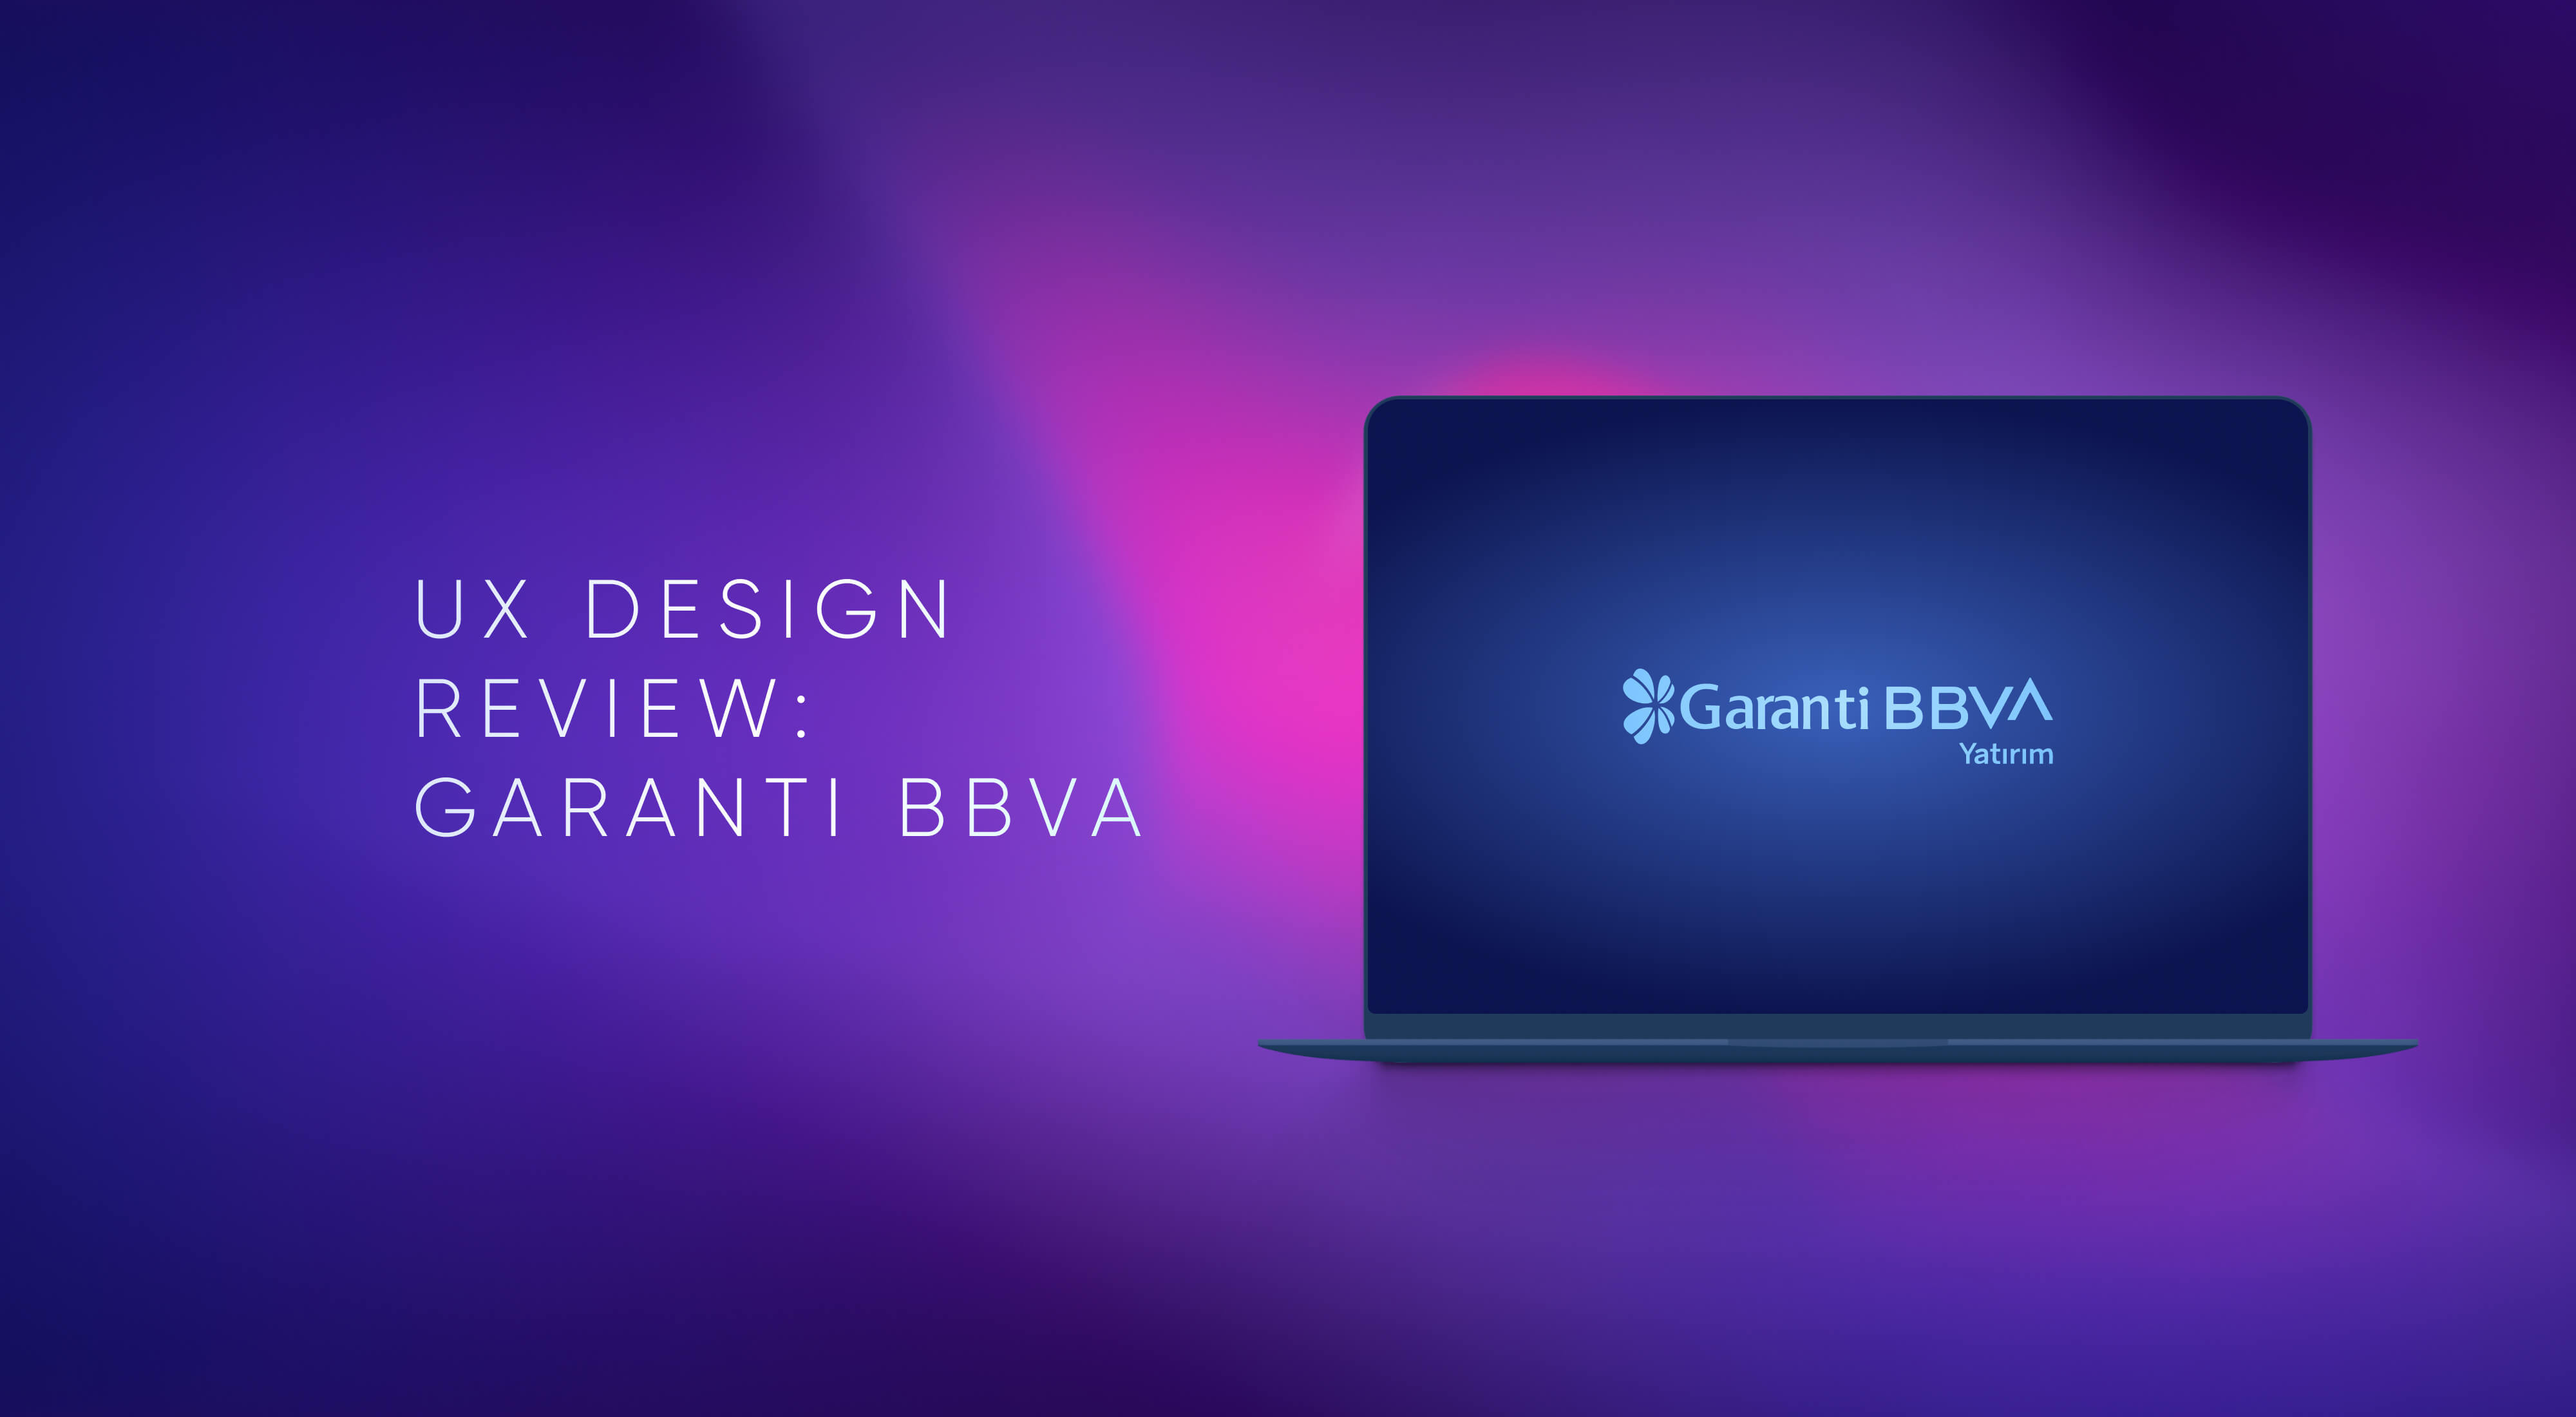 UX Design Review: What Garanti BBVA Said About UXDA